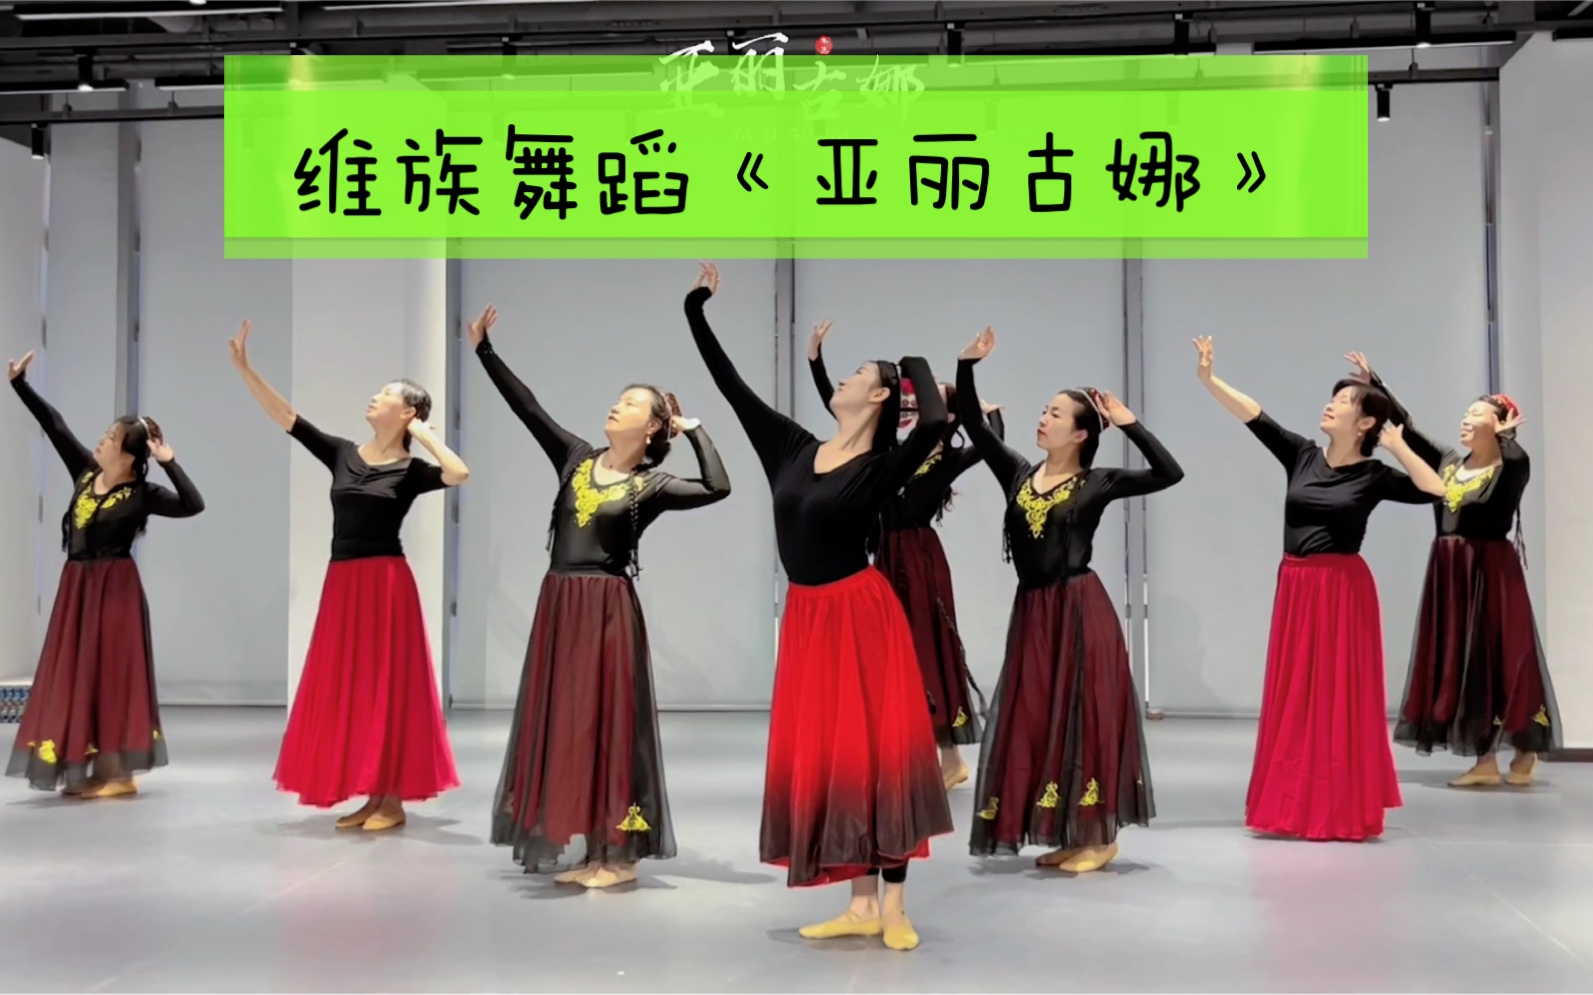 【古典/民间】中国舞专业舞蹈生的日常记录_哔哩哔哩 (゜-゜)つロ 干杯~-bilibili